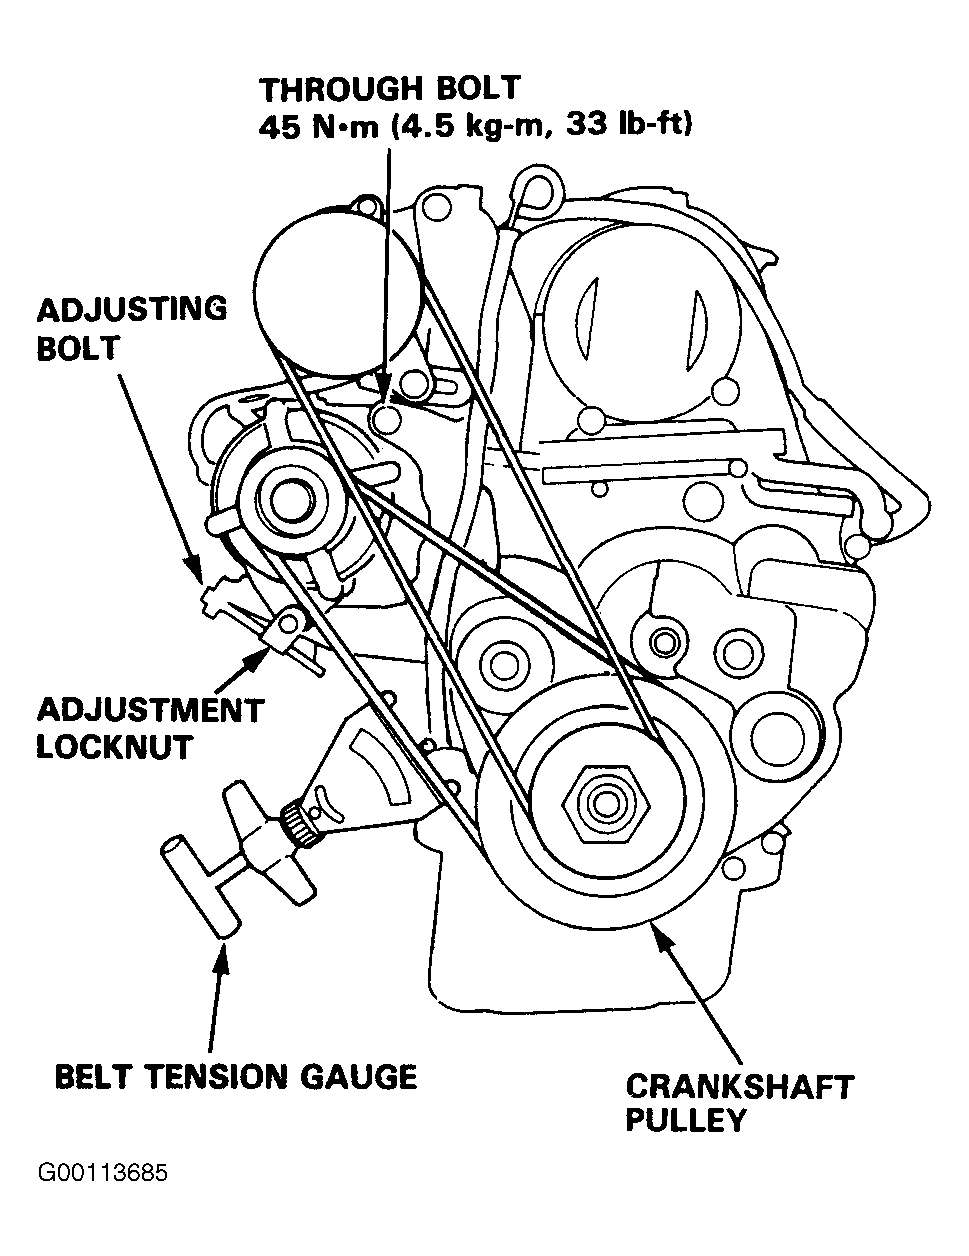 1992 Honda Civic Serpentine Belt Routing And Timing Belt Diagrams